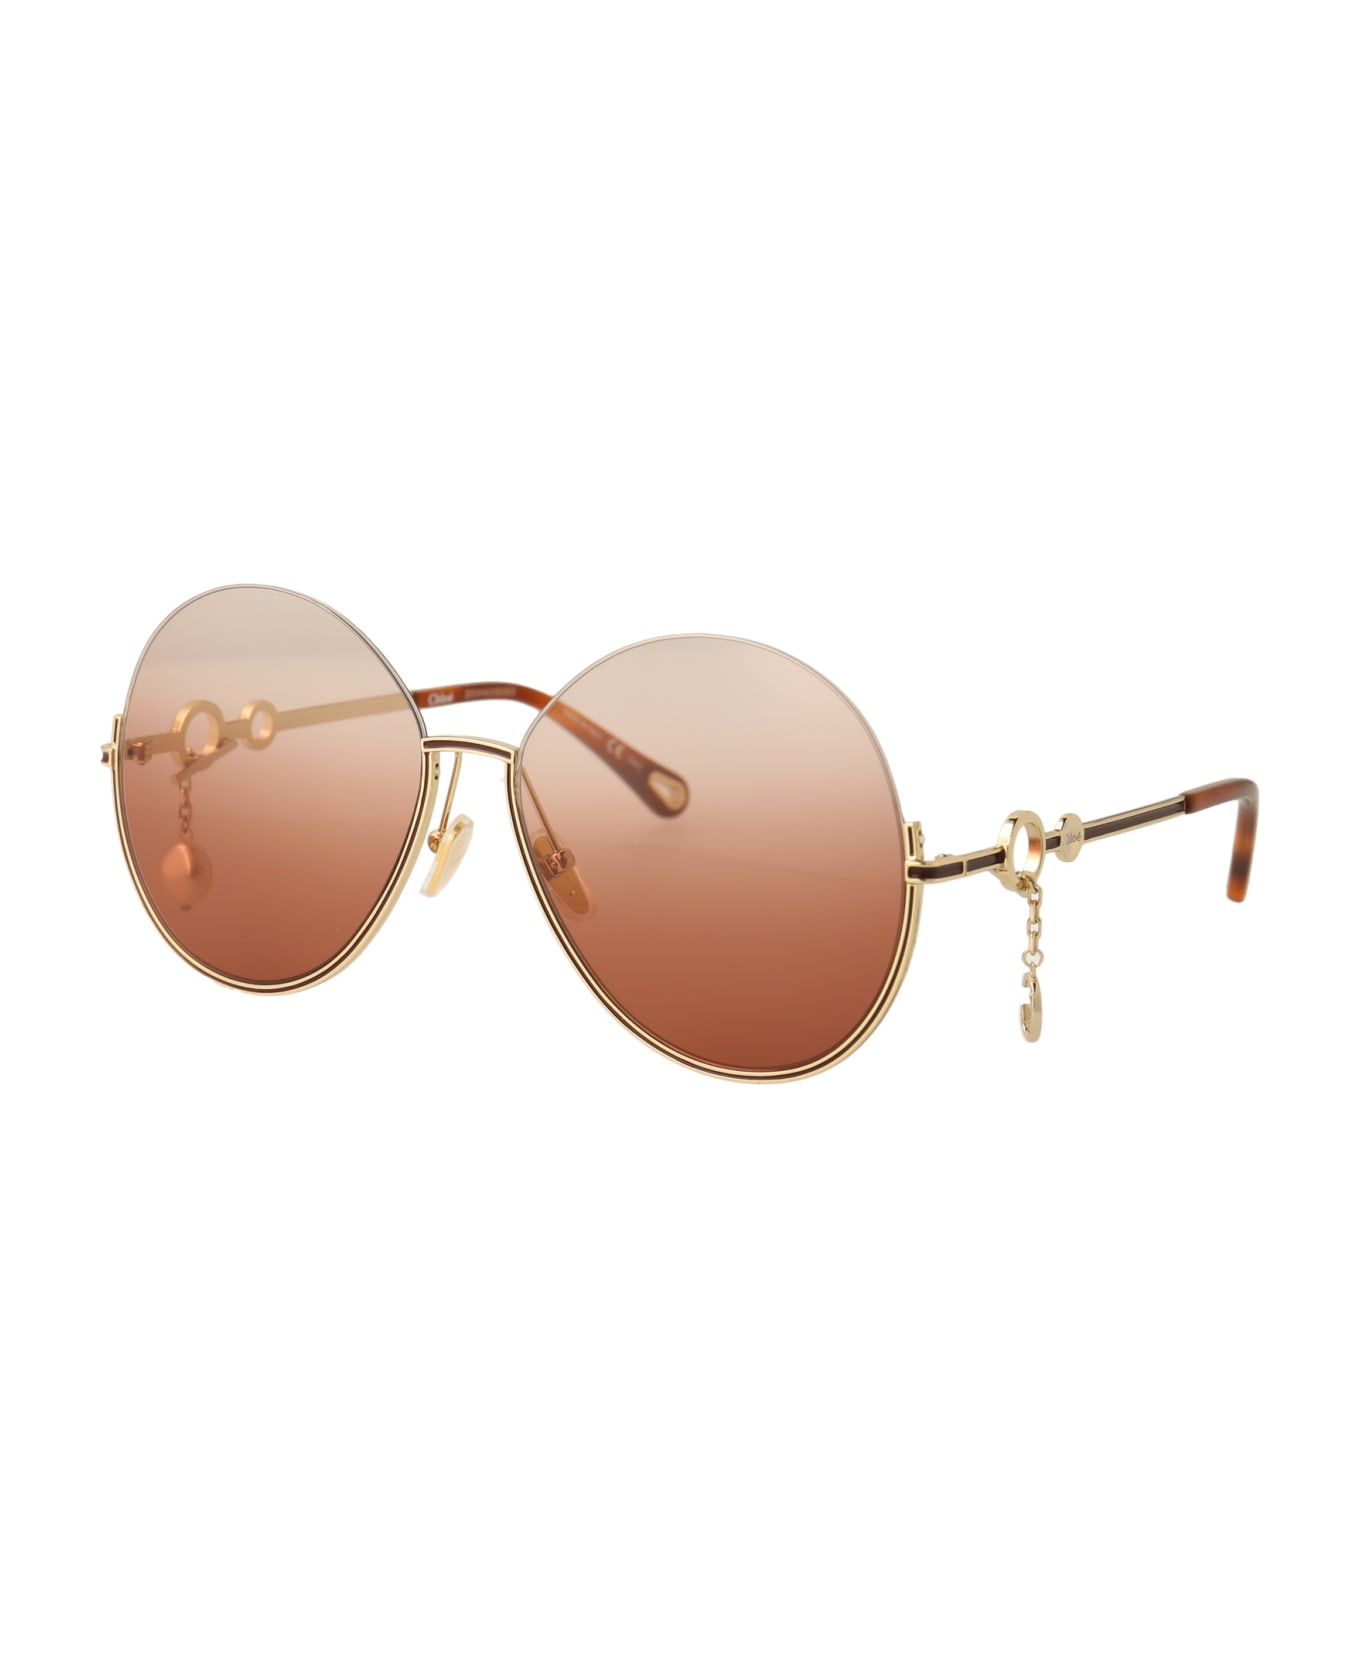 Chloé Eyewear Ch0067s Sunglasses - 002 GOLD GOLD ORANGE サングラス